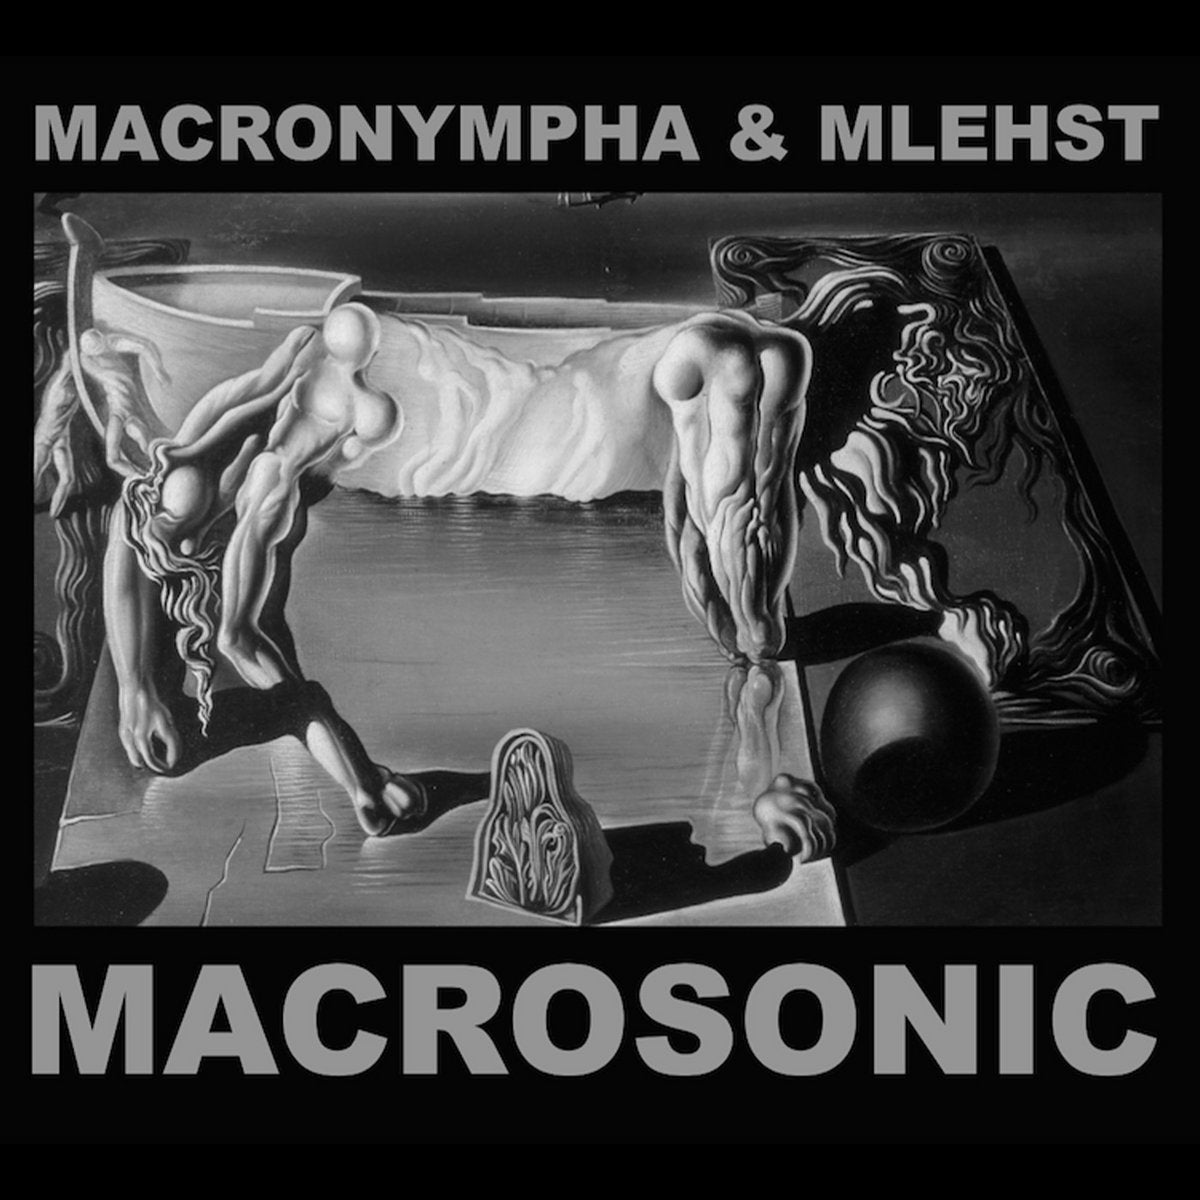 Macronympha & Mlehst - Macrosonic CD